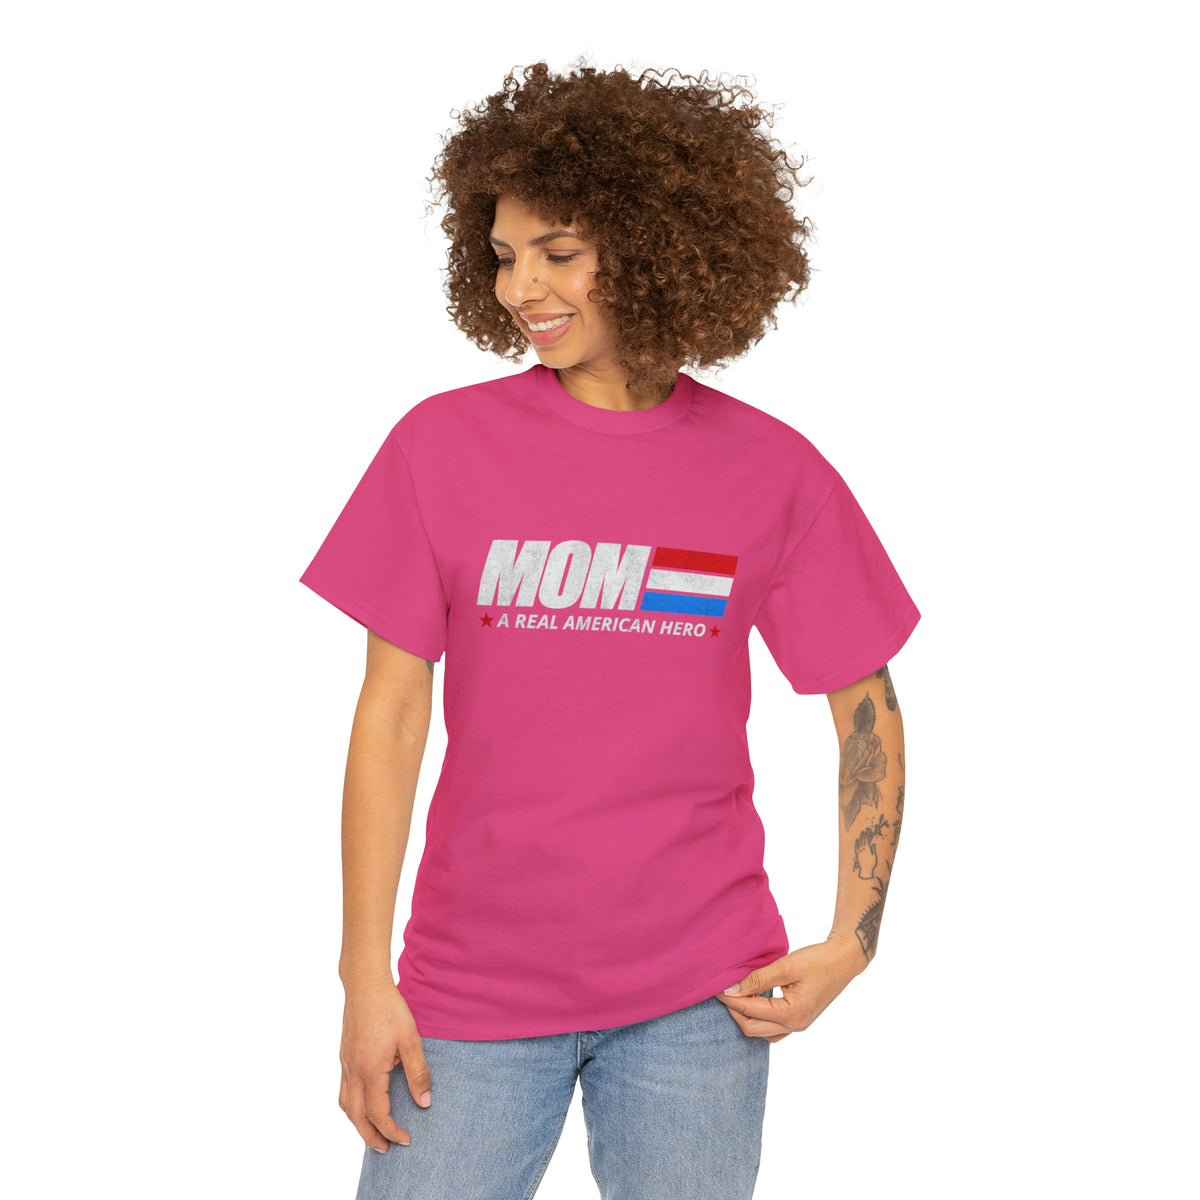 Mom - A Real American Hero T-Shirt